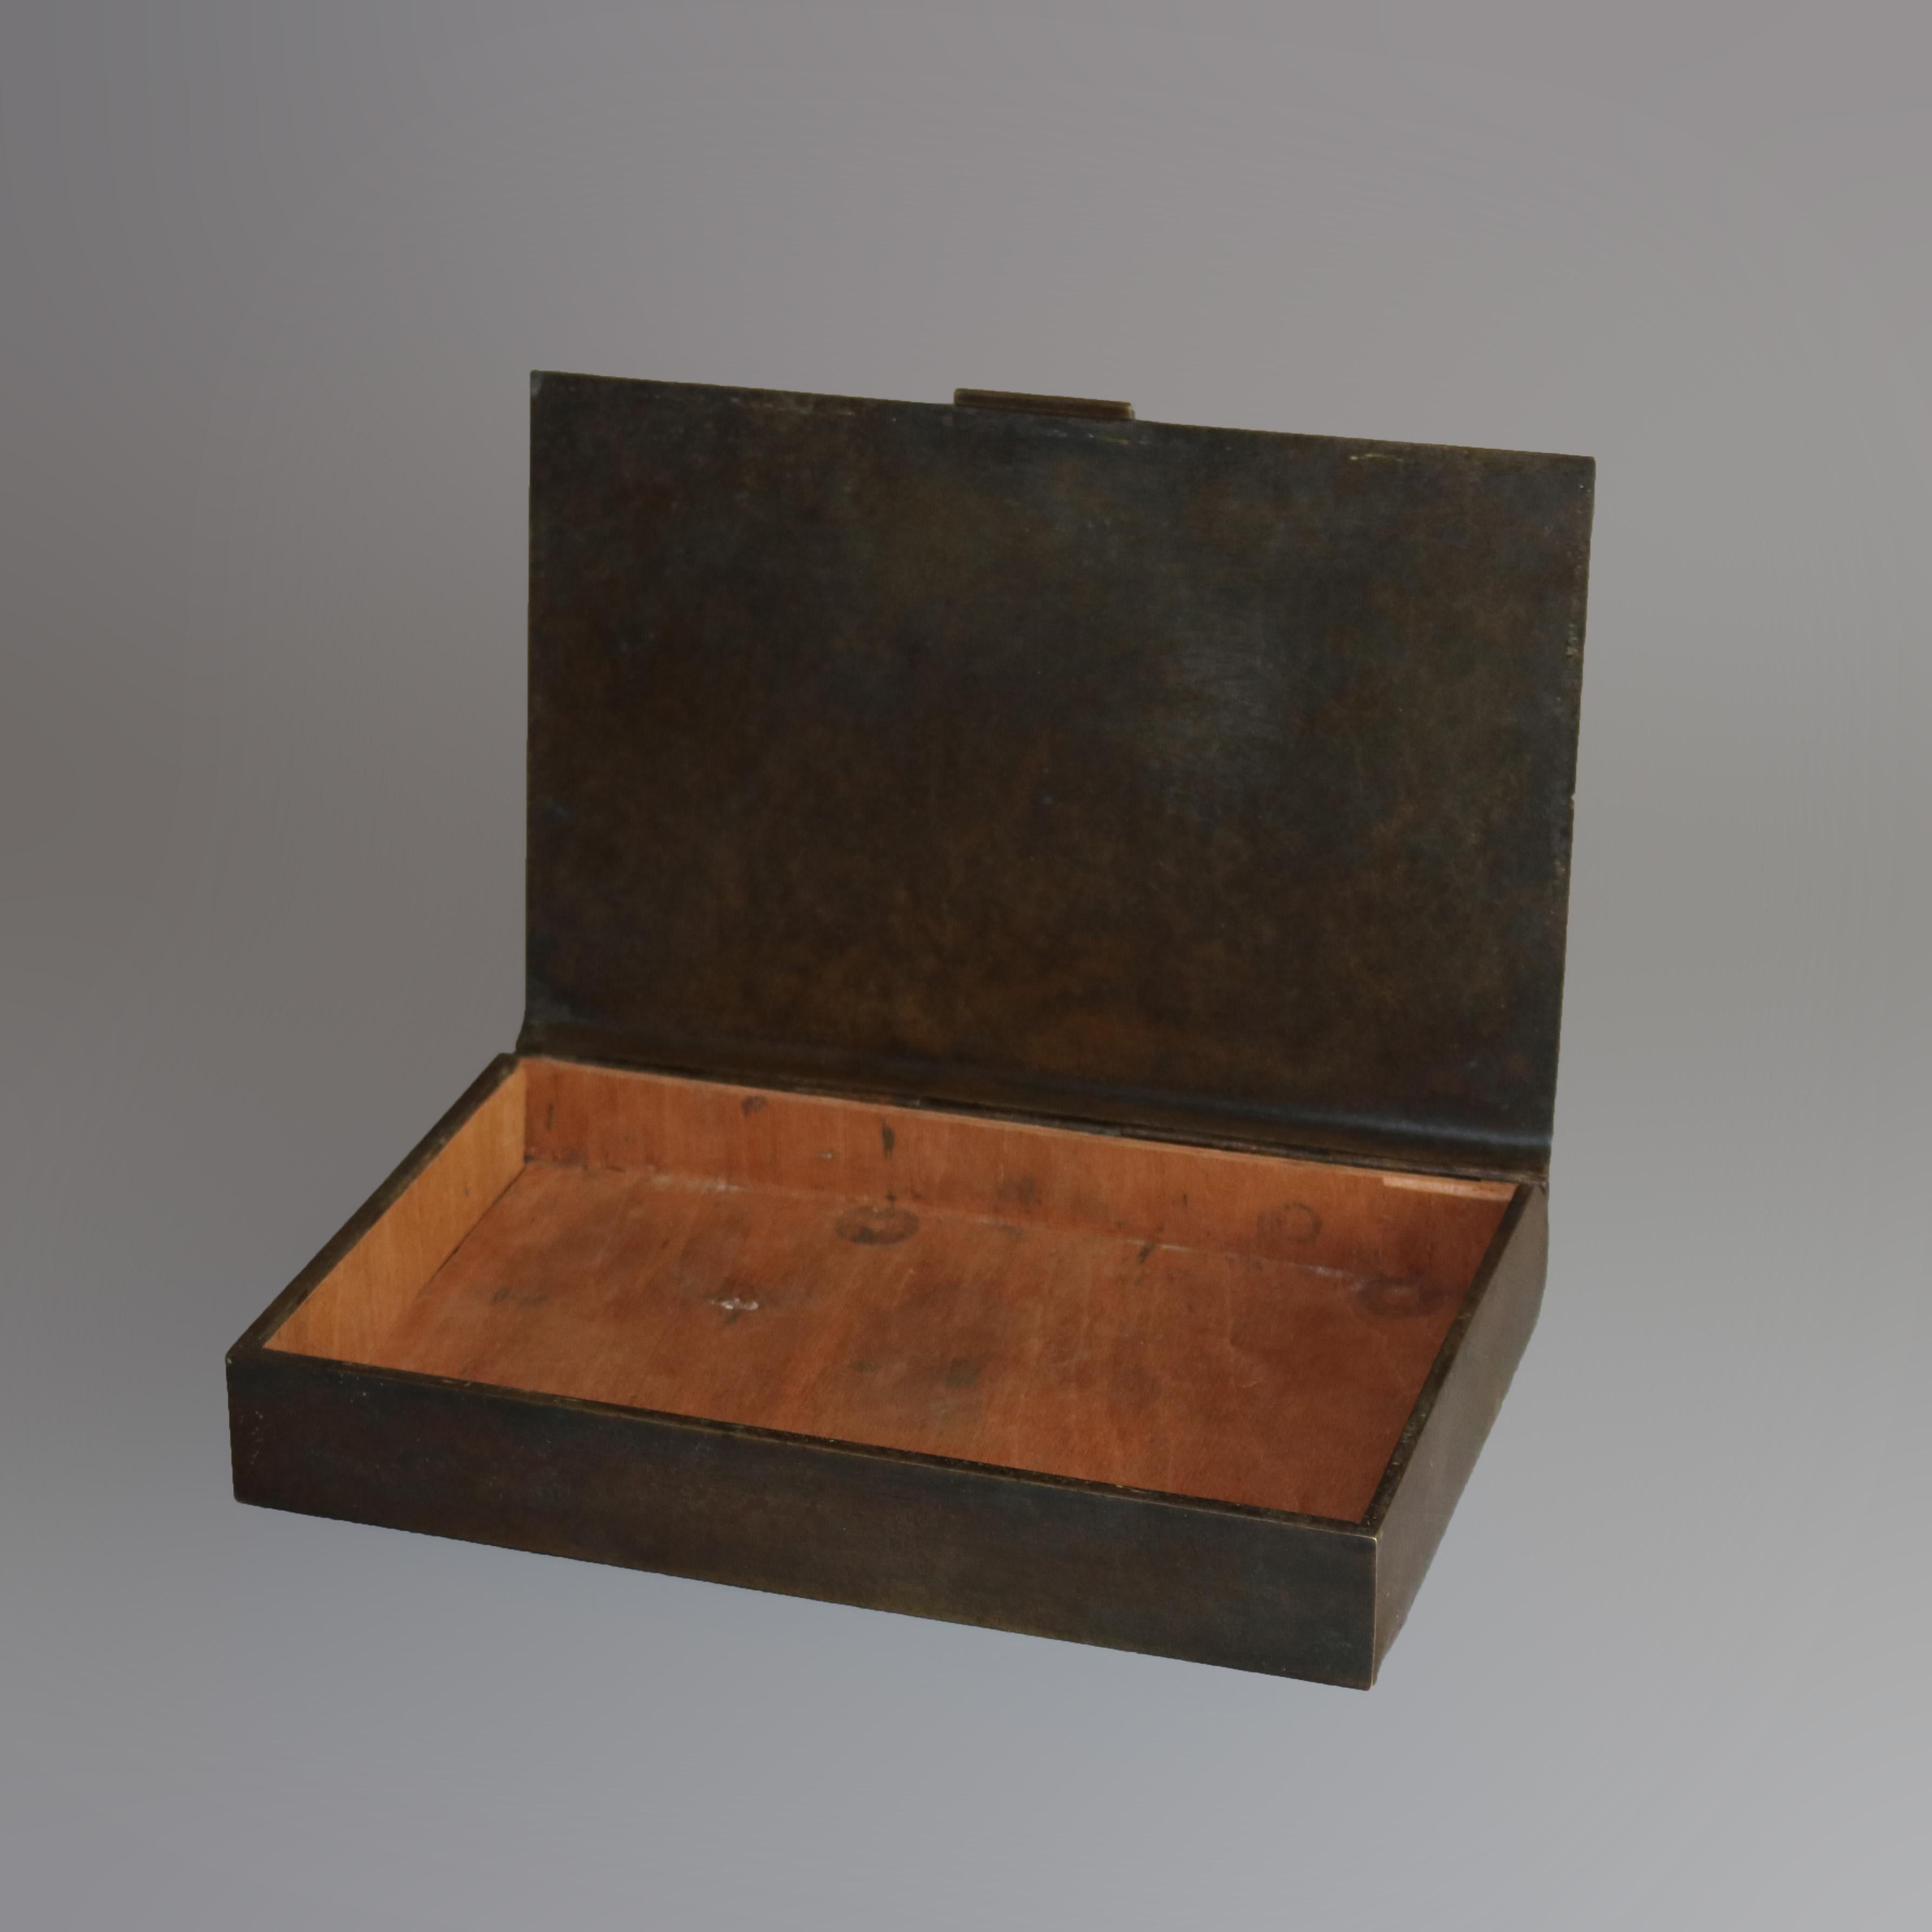 American Antique Arts & Crafts Dirk Van Erp Hammered Copper Box, Lined, circa 1910